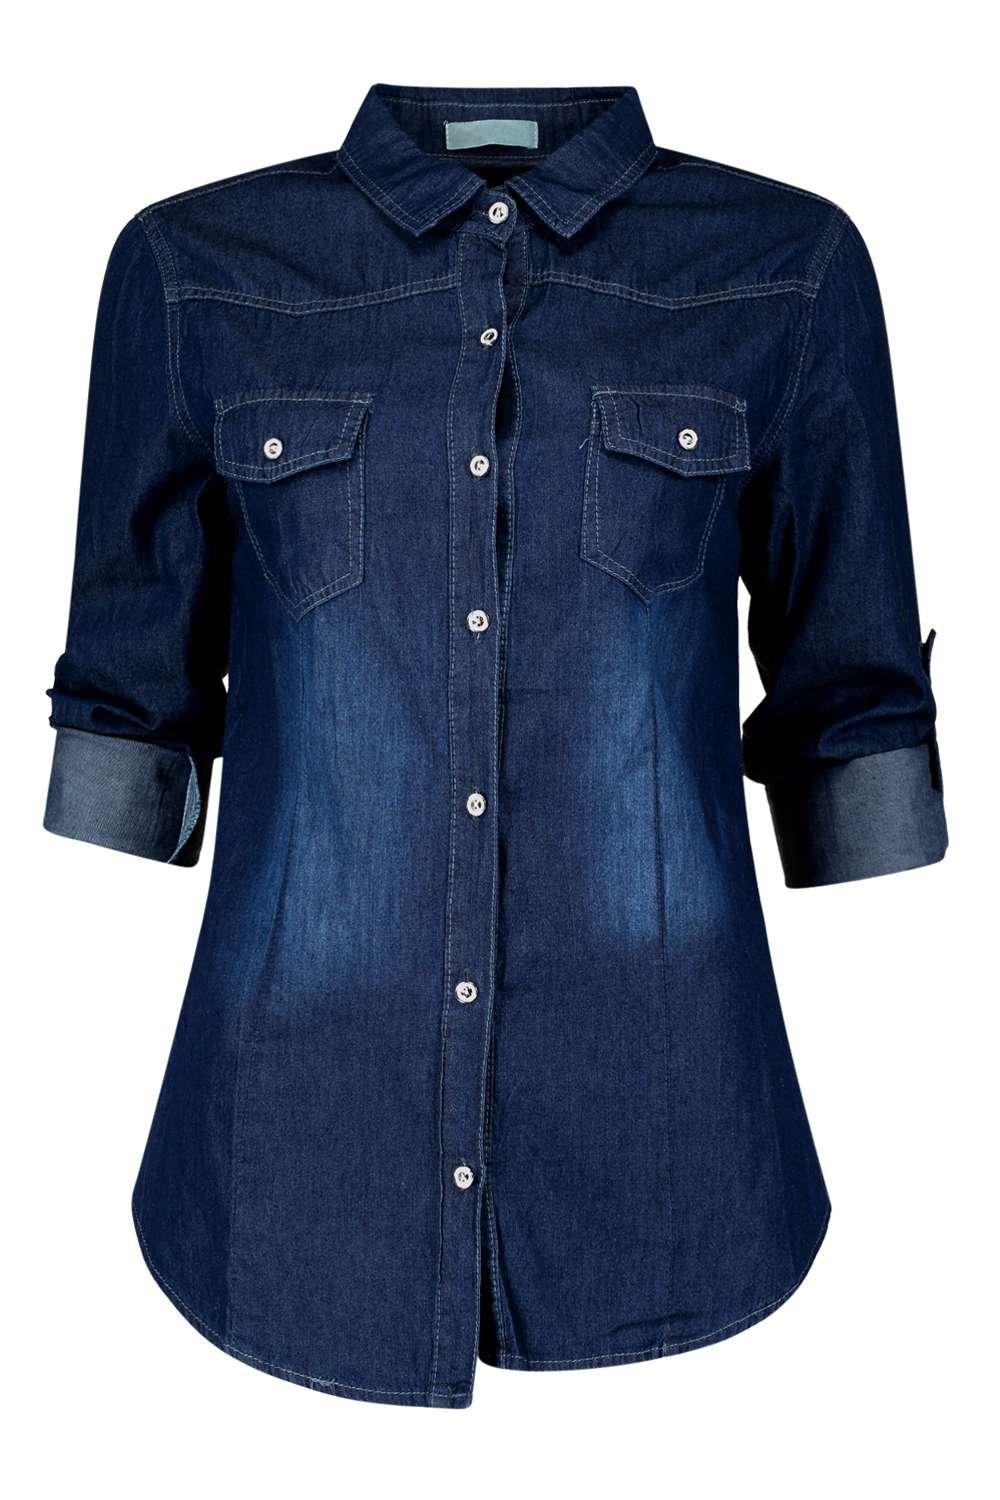 Boohoo Womens Jenna Slim Fit Roll Sleeve Western Denim Shirt | eBay